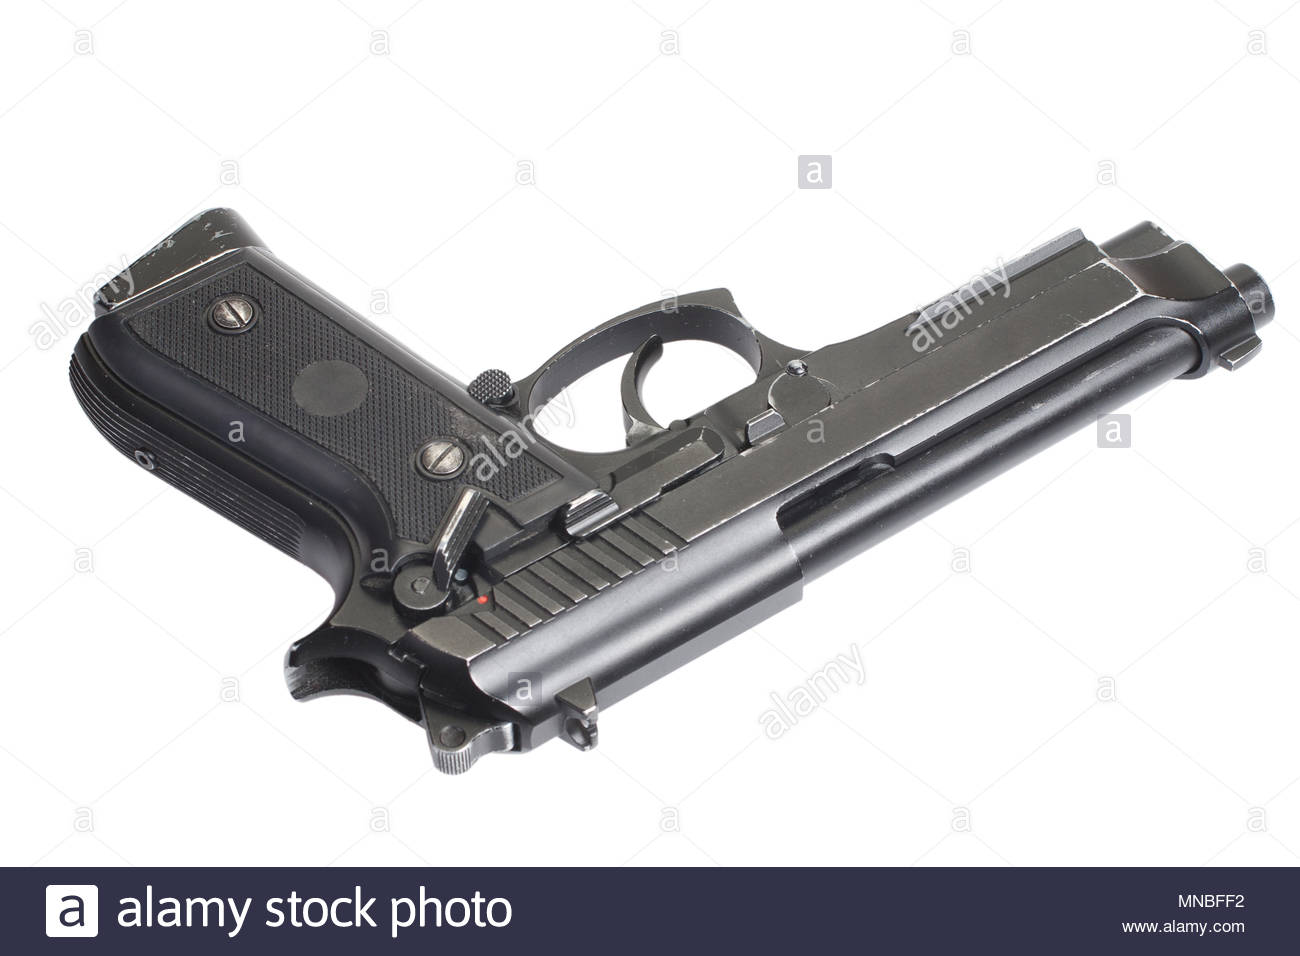 Beretta M9 Gun Isolated On White Background Stock Photo